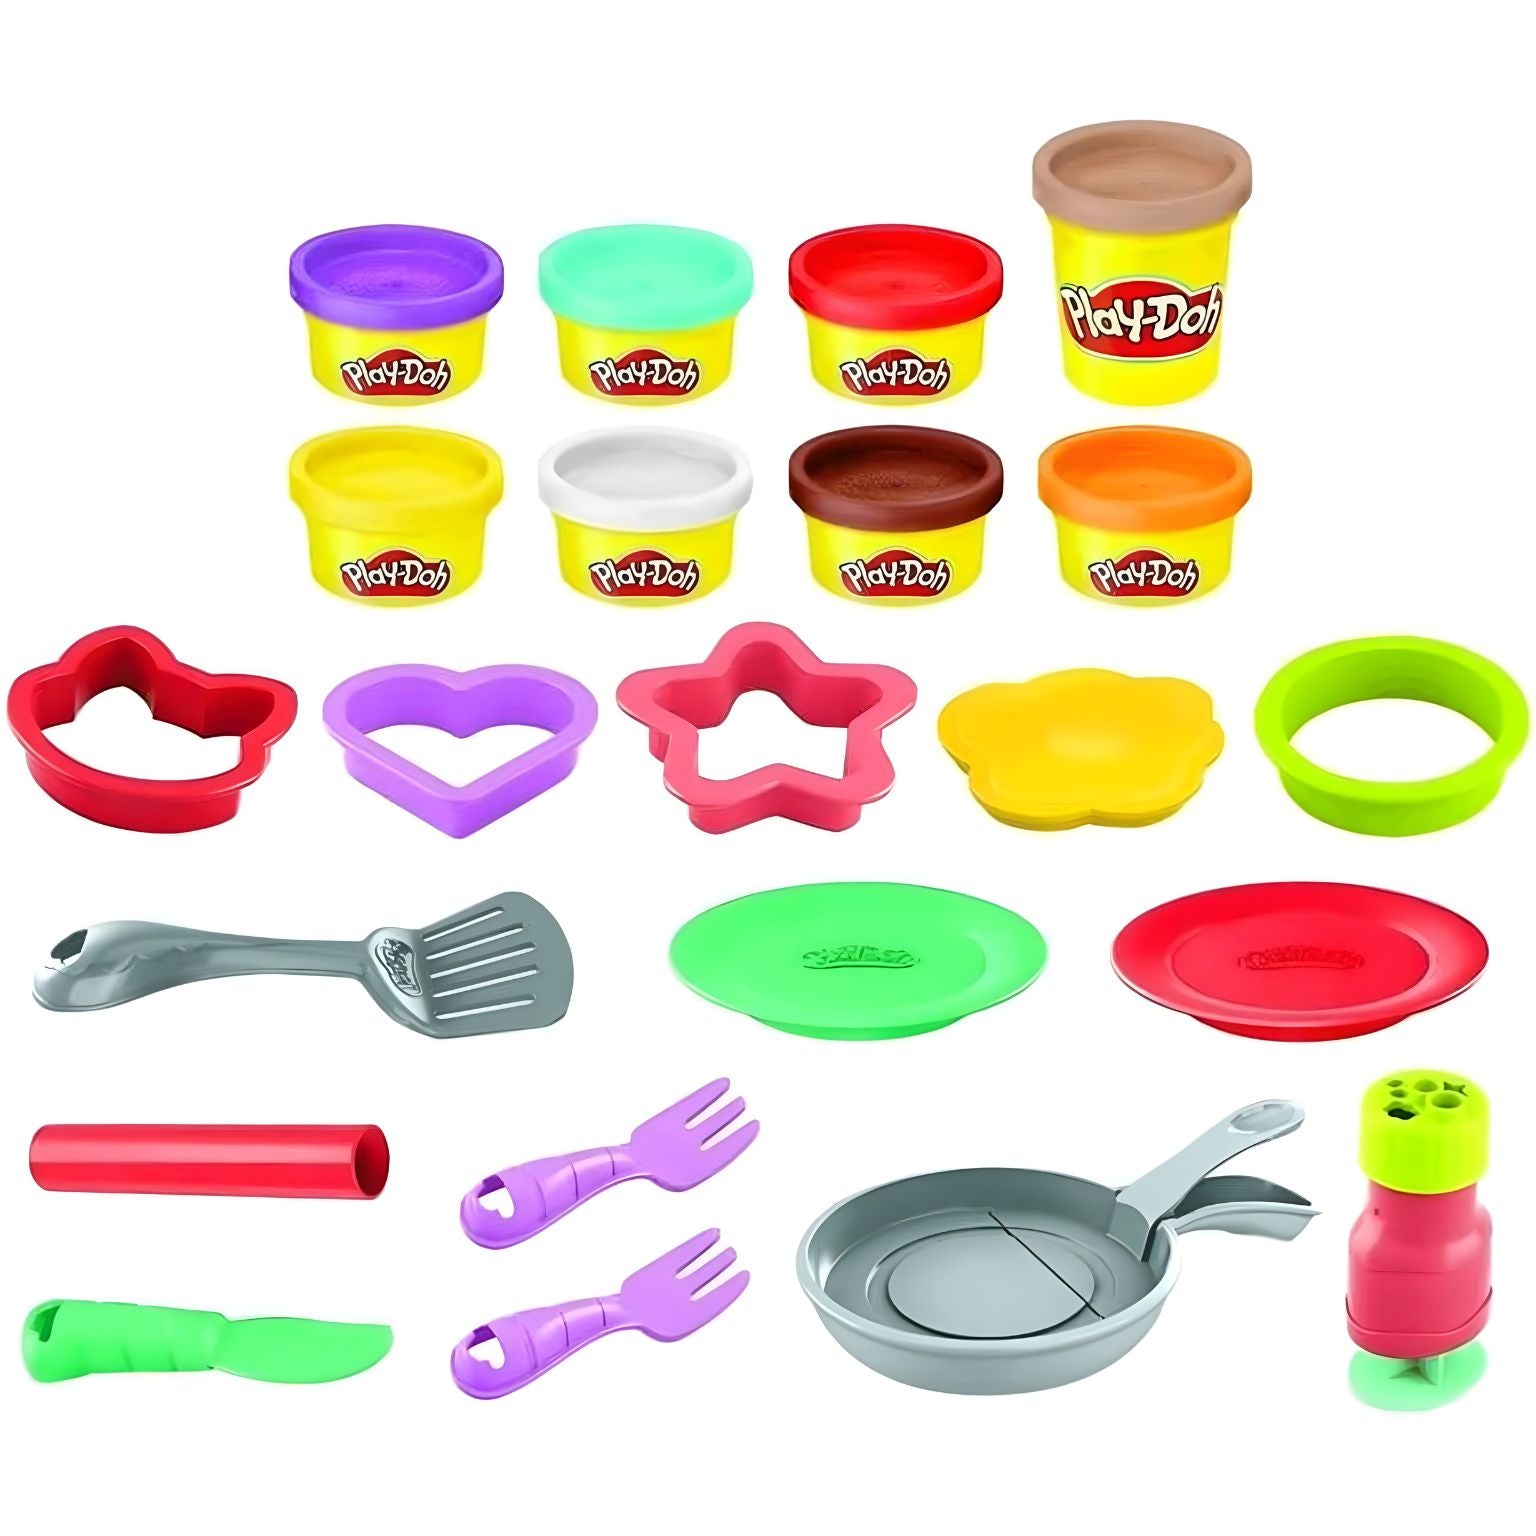 Play-Doh Festa da Panqueca